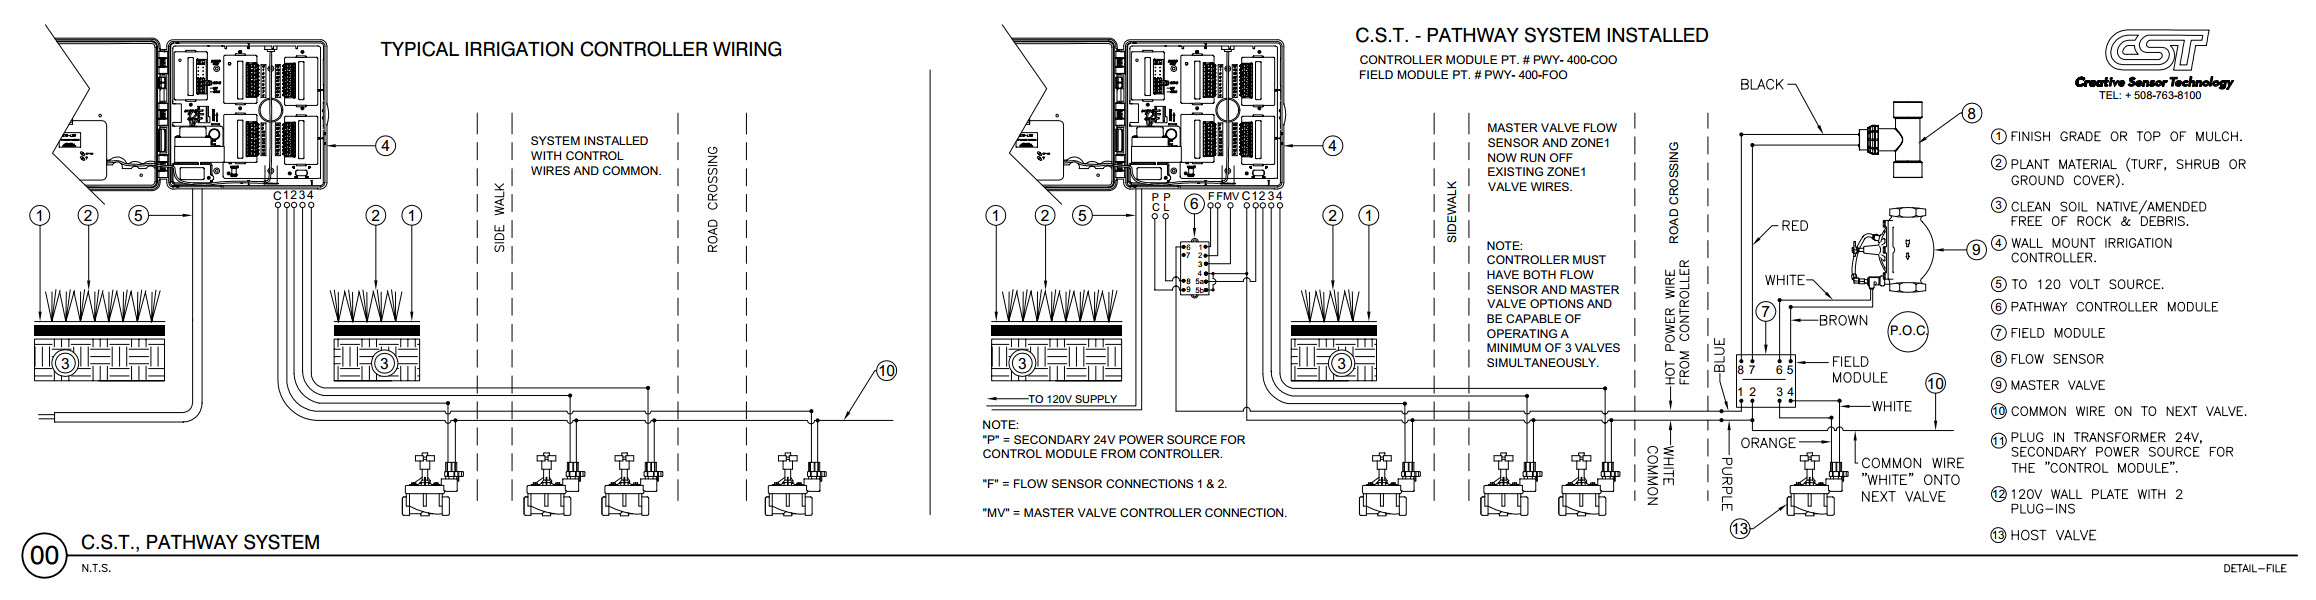 rain bird esp-rzx wiring diagram